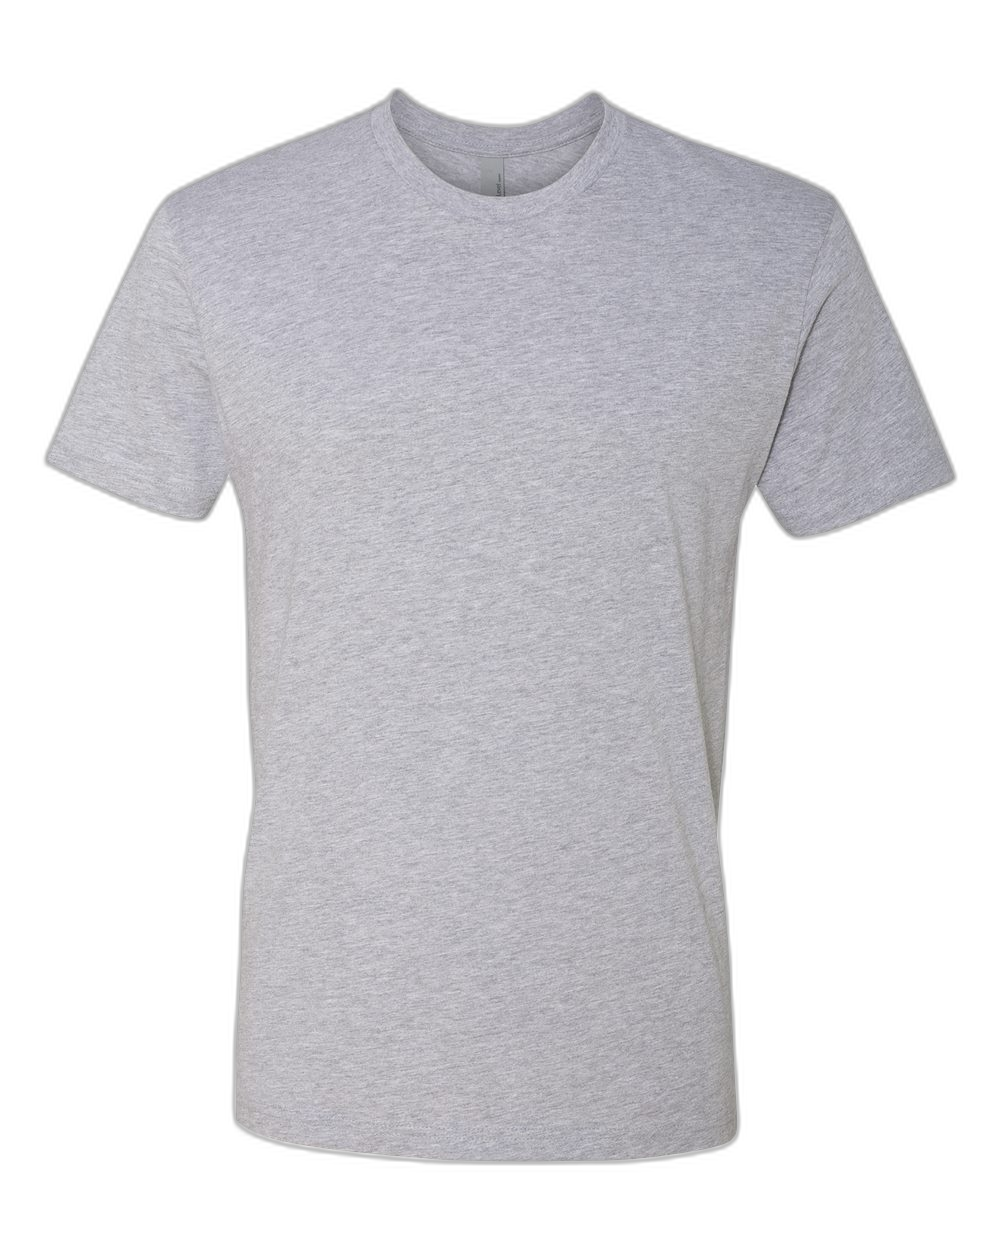 Next Level Premium Unisex Cotton T-Shirt